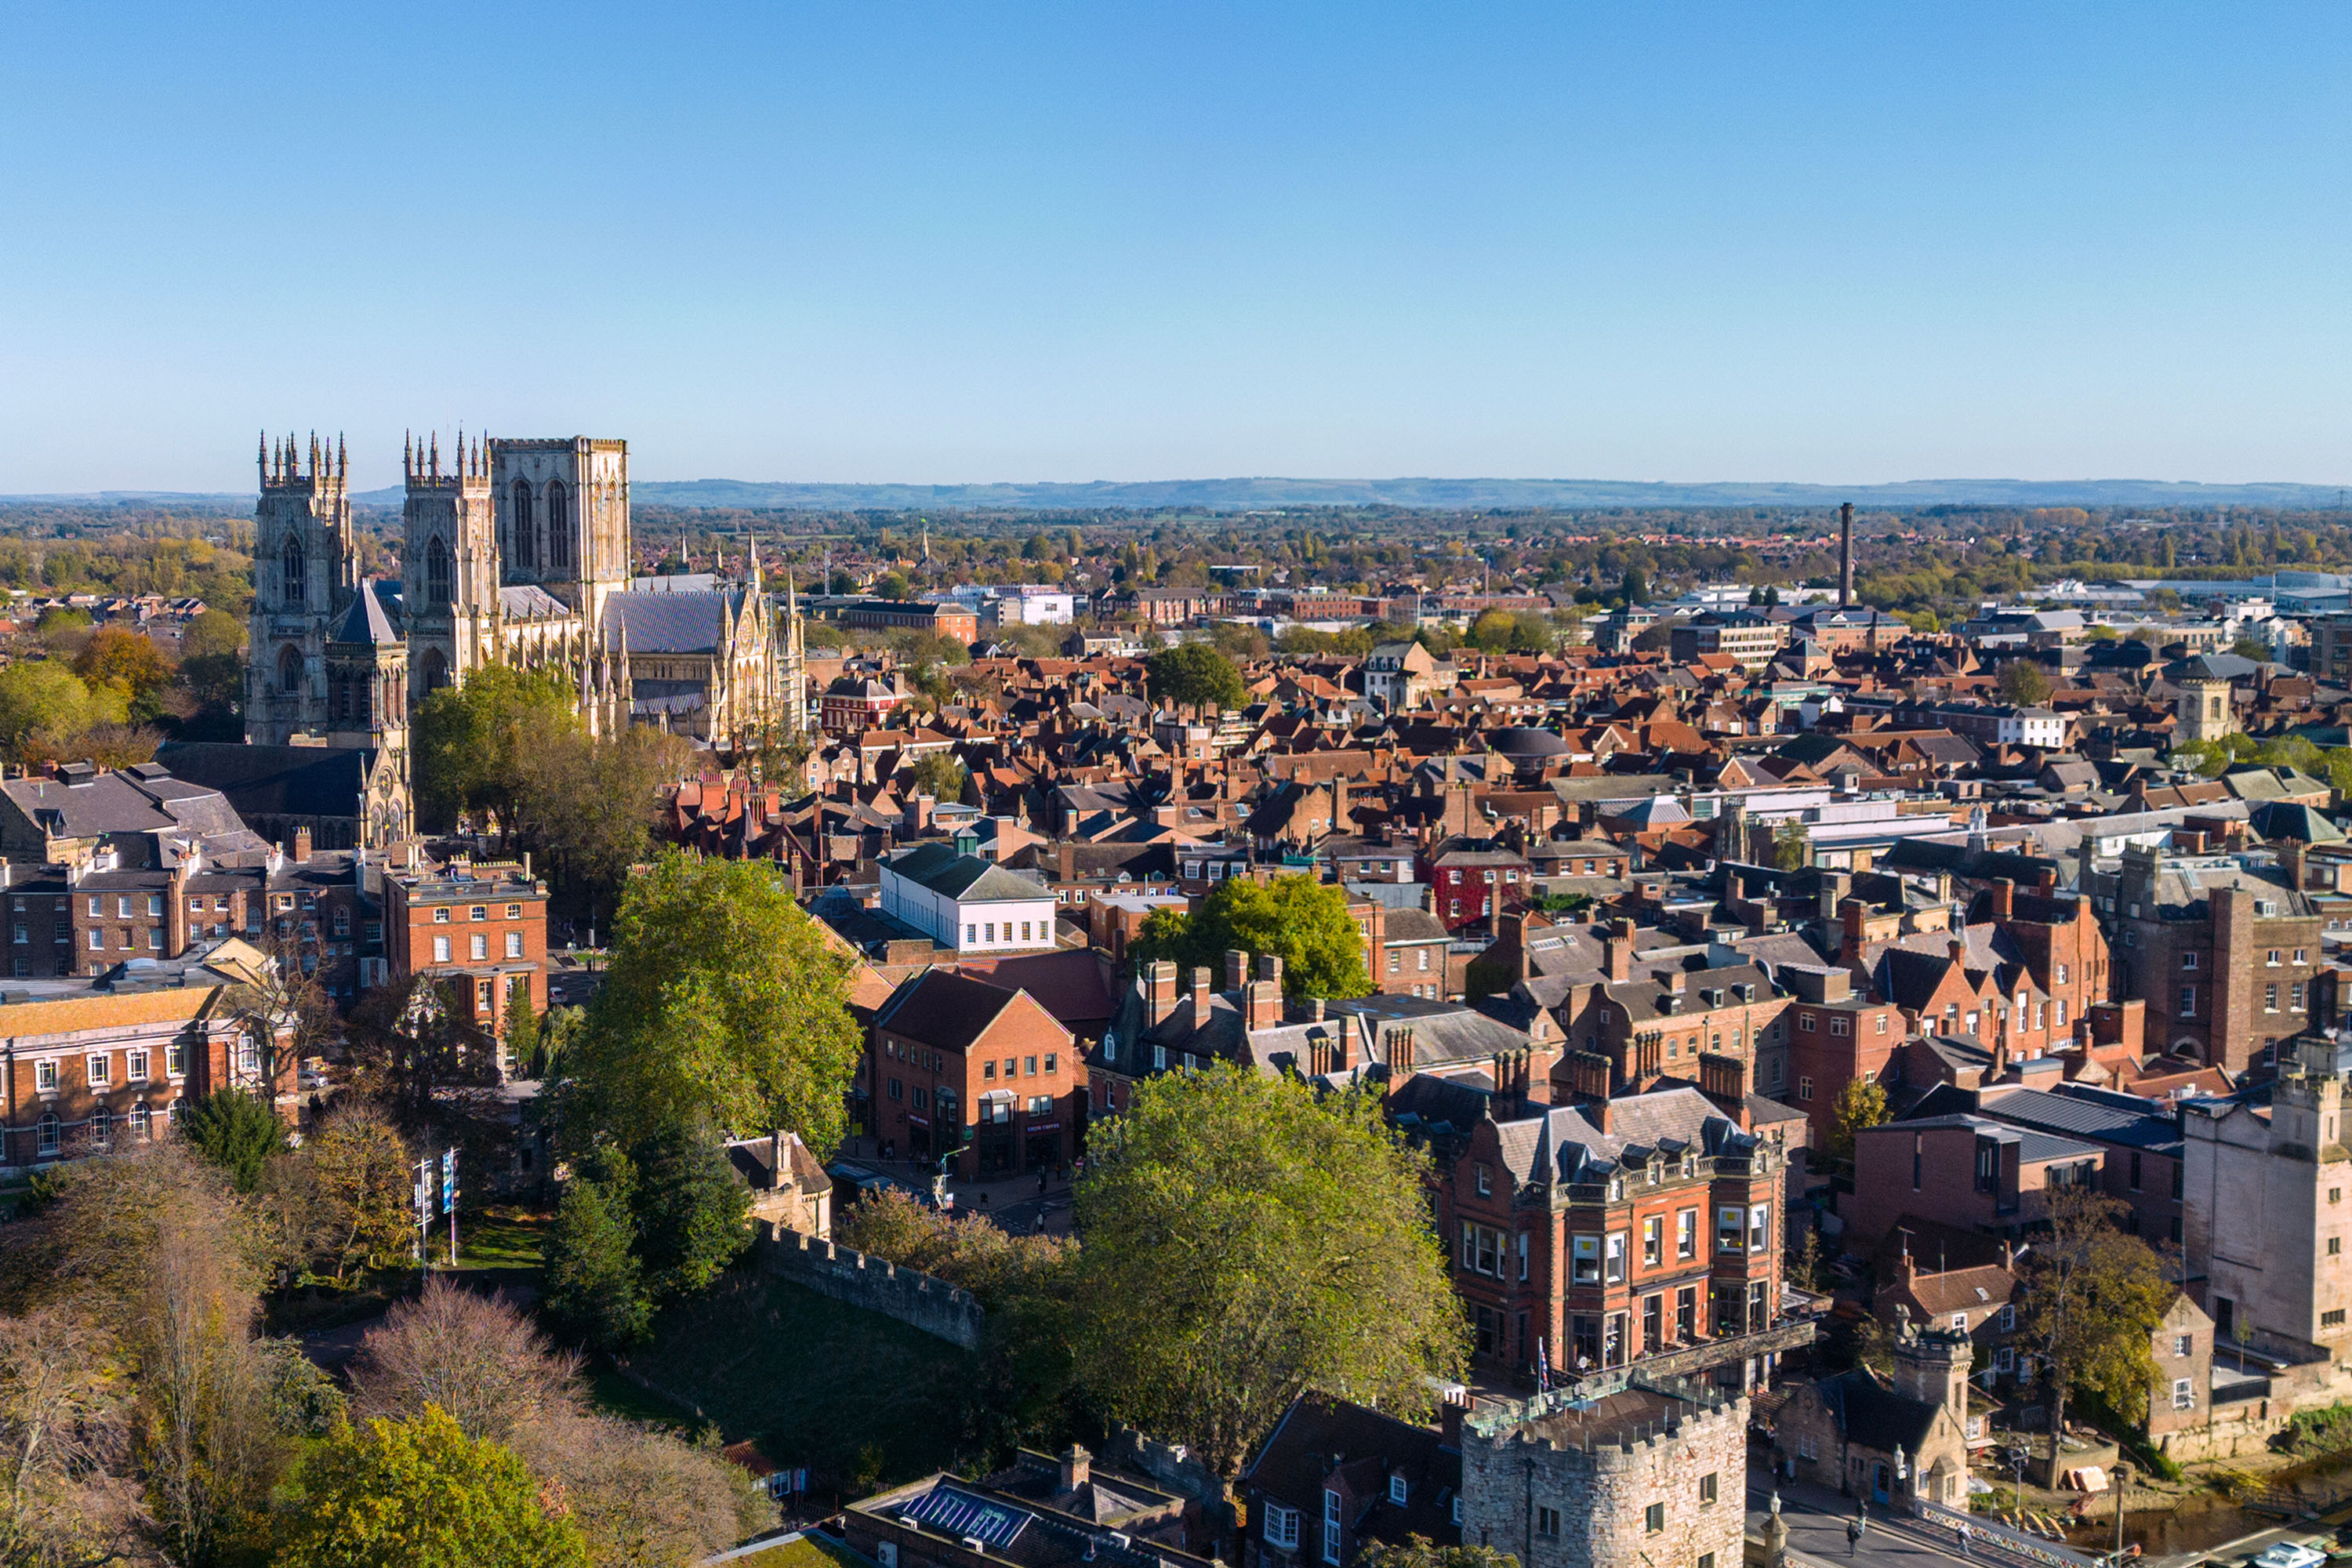 City view of York